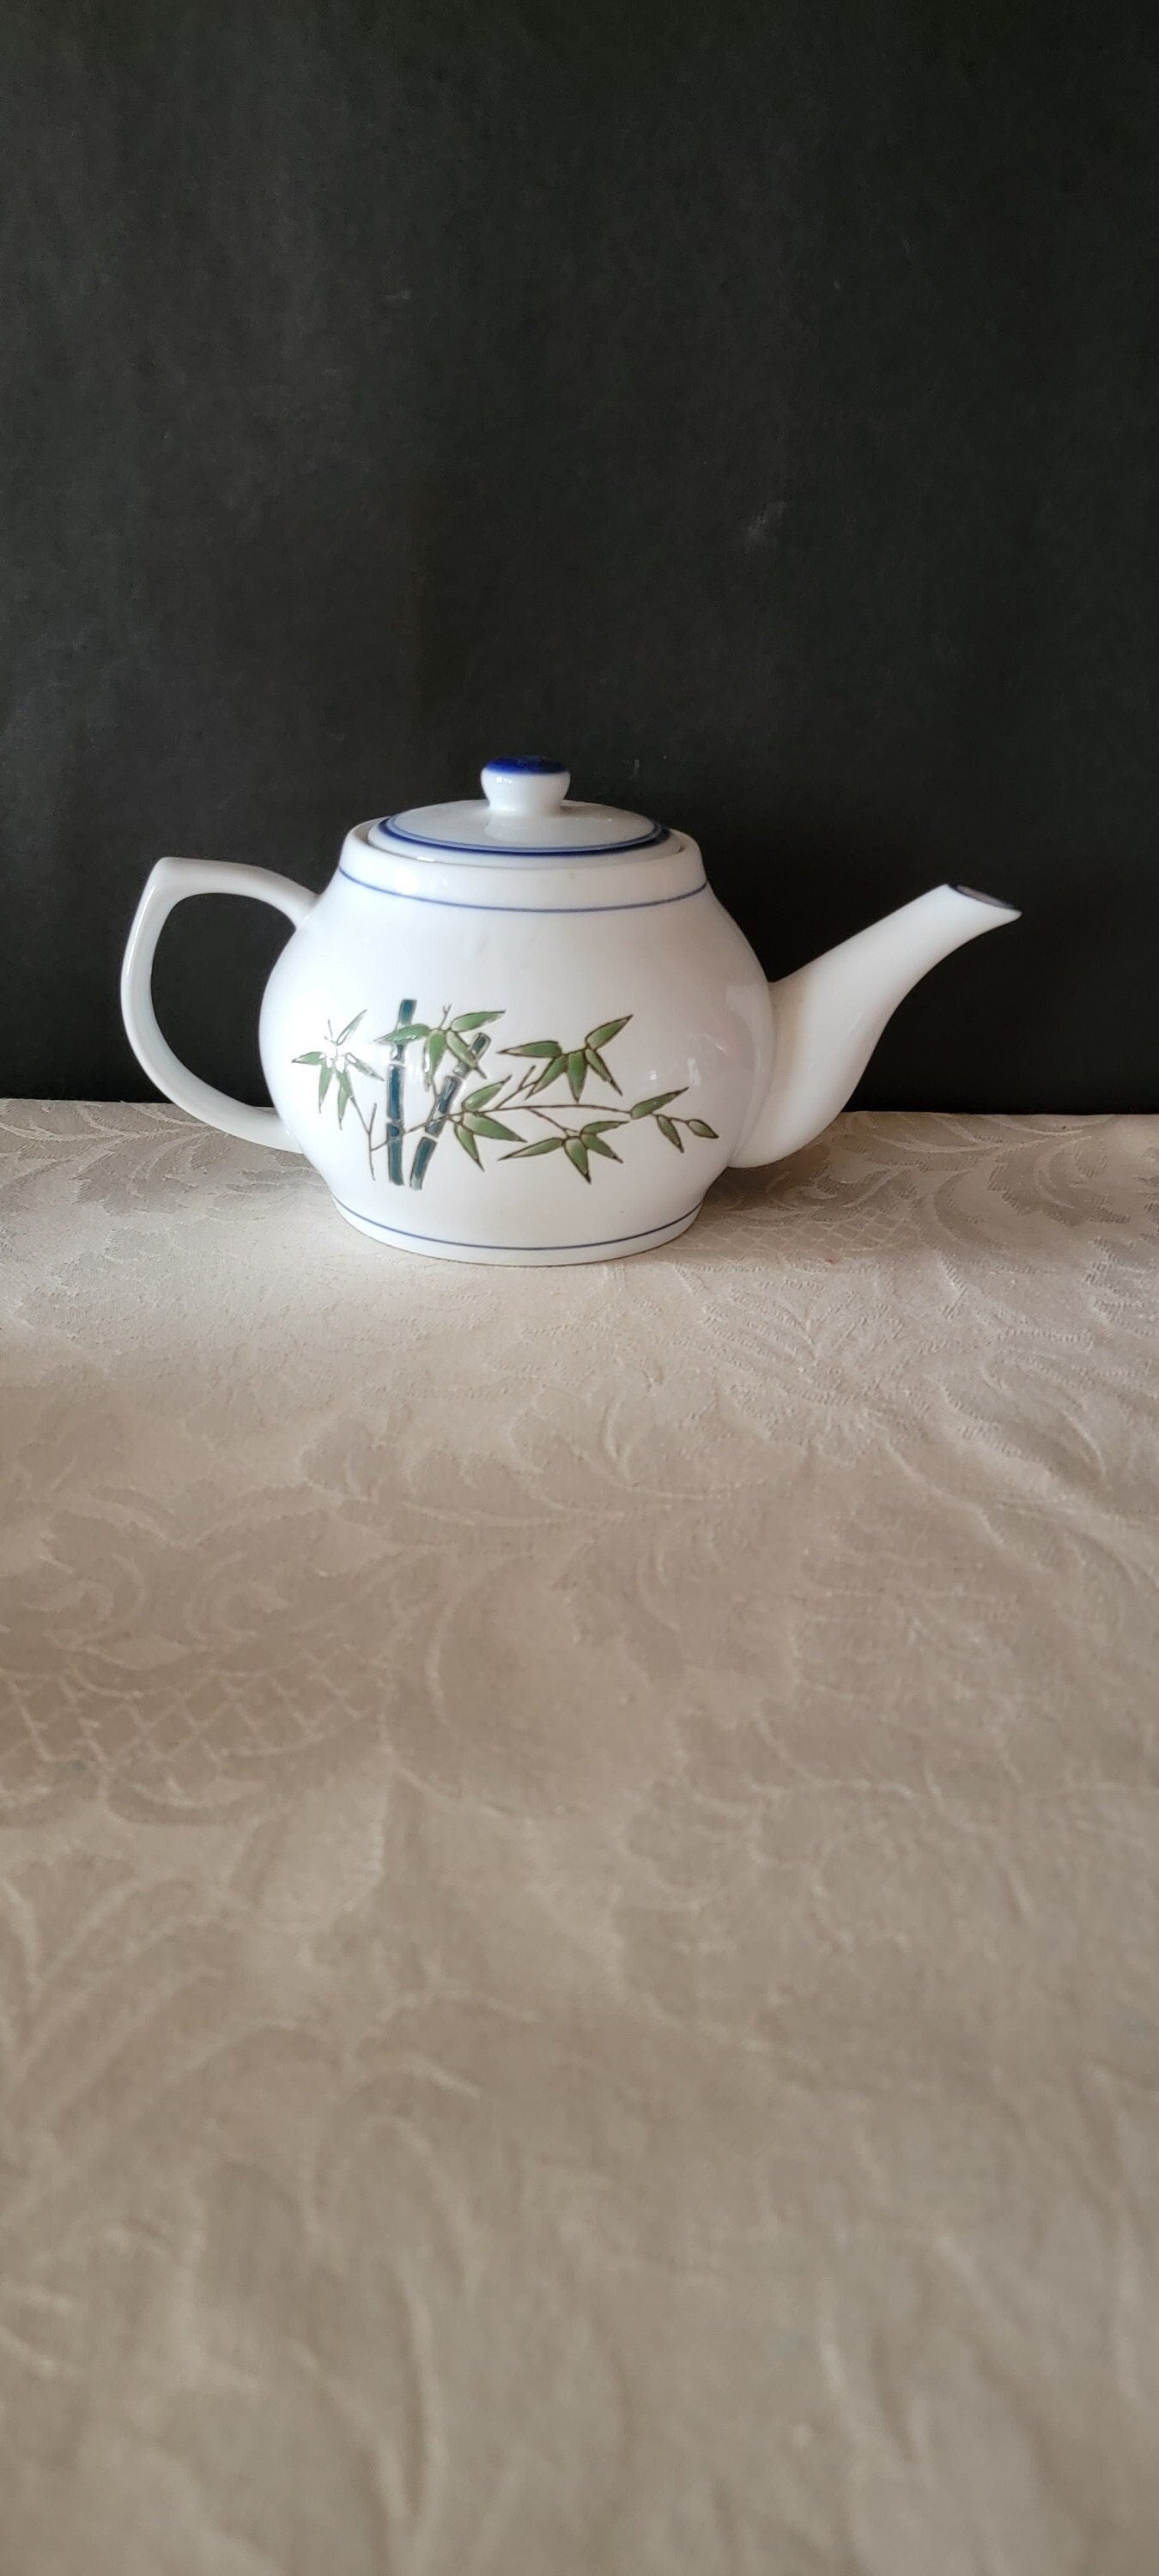 Bella Electric Ceramic Kettle, White & Silver - Tea Pot Teapot Handle 1.2L,  New